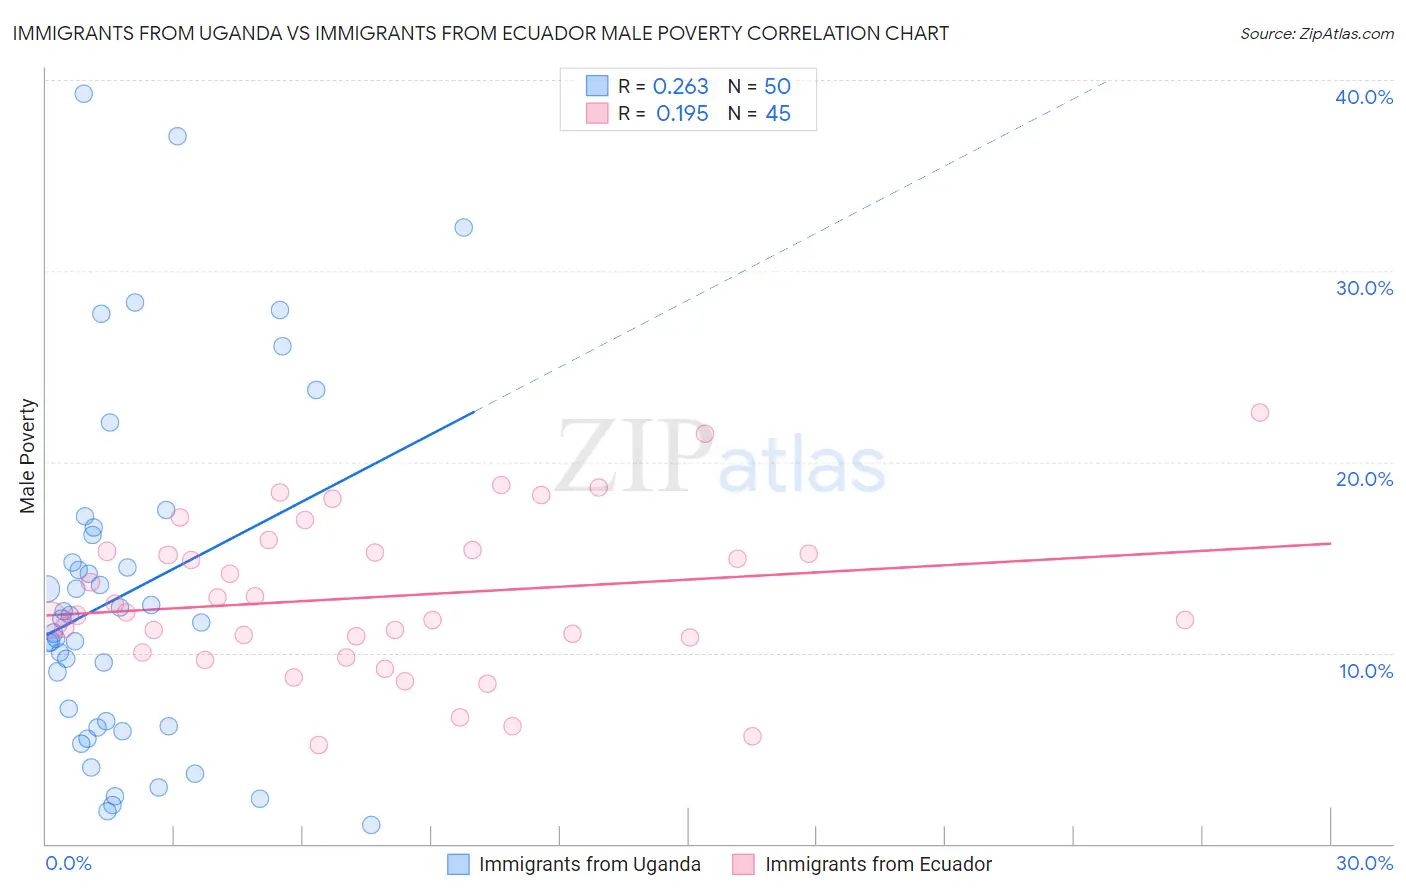 Immigrants from Uganda vs Immigrants from Ecuador Male Poverty